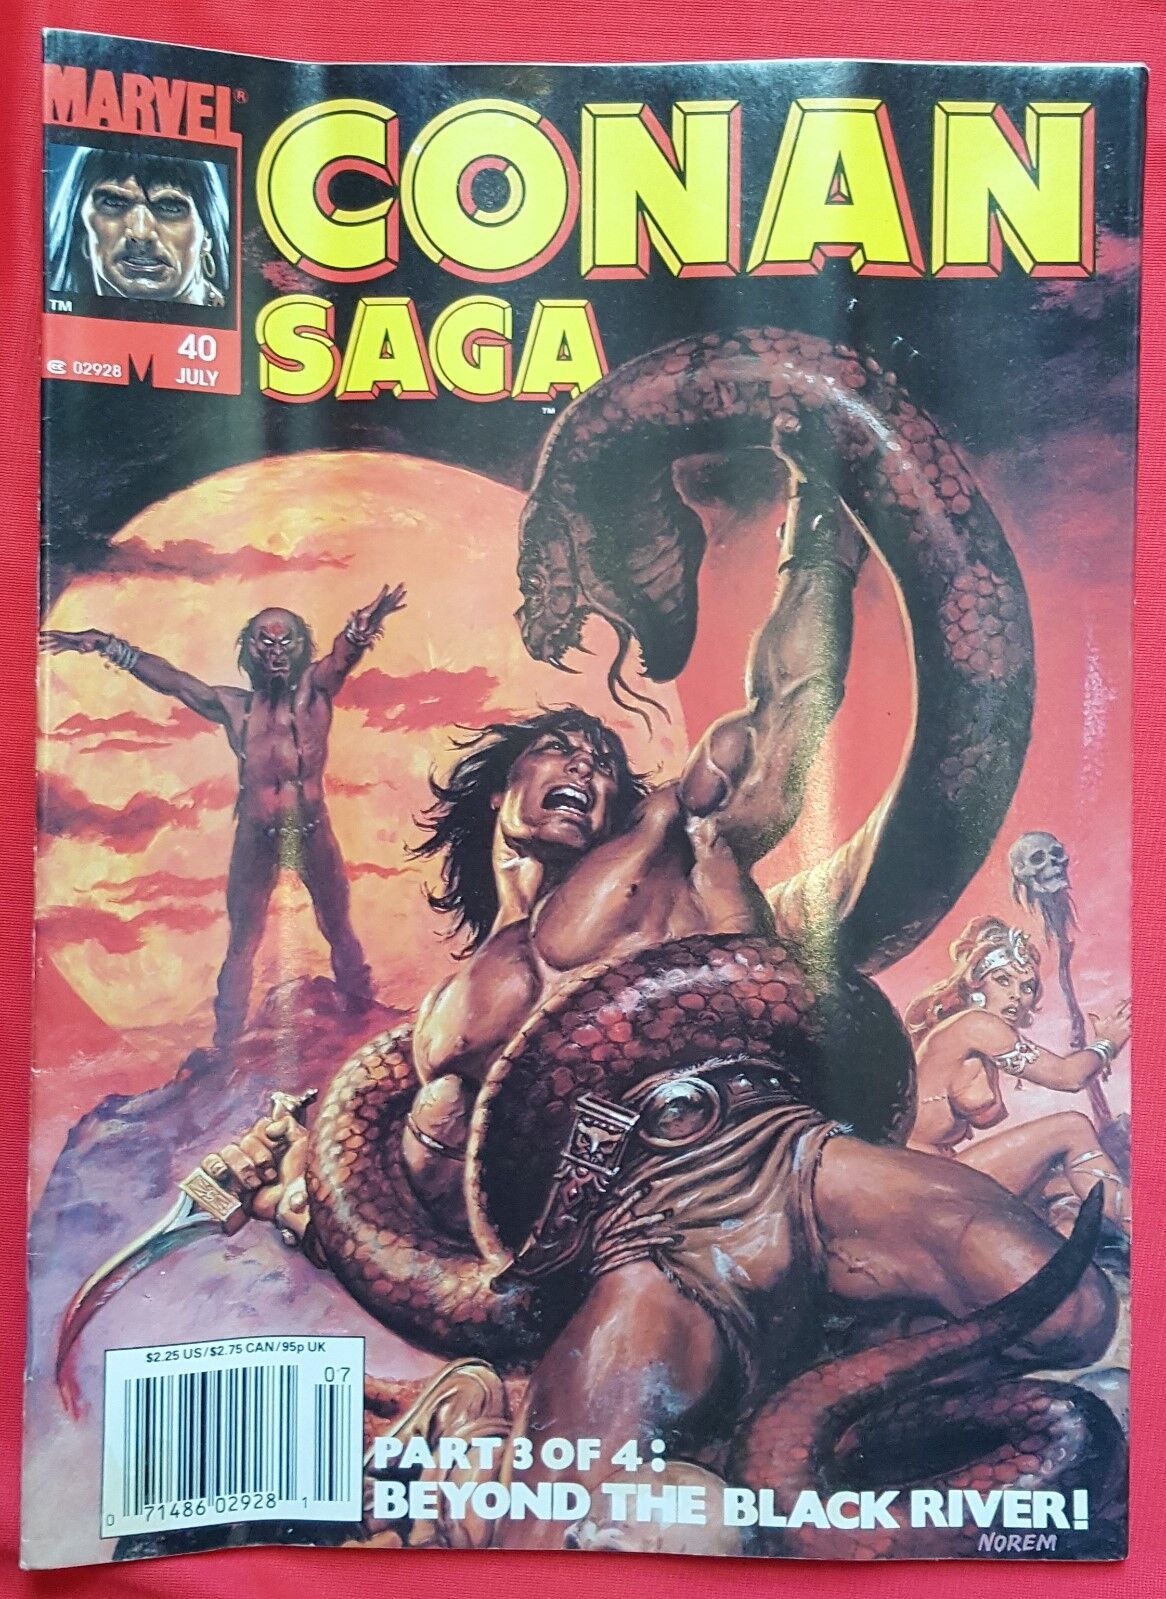 Primary image for Conan Saga #40 (July 1990, Marvel Magazine) Volume 1